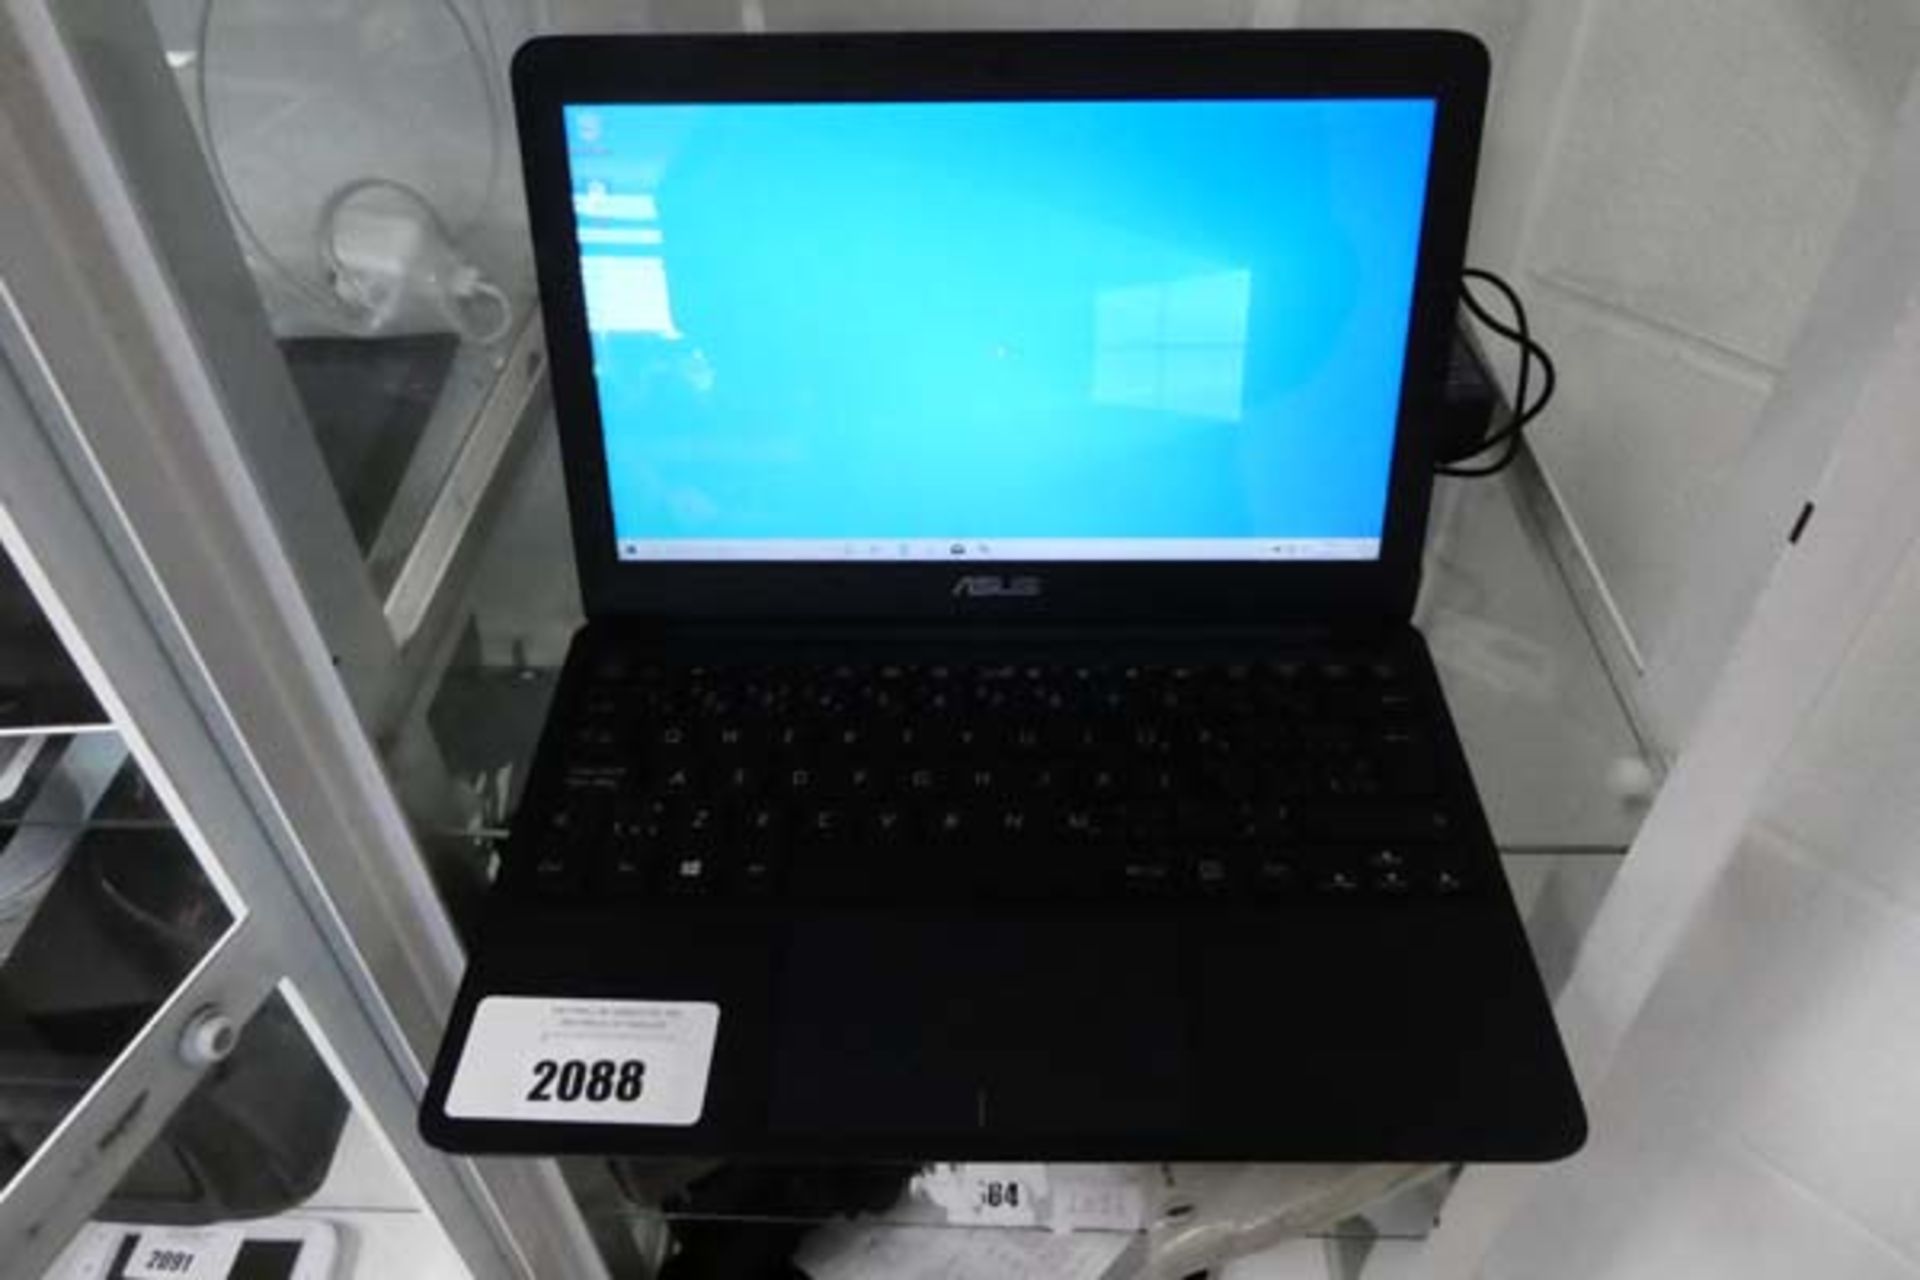 Asus X205TA Notebook, intel atom processor, 2gb ram, 32gb storage running Windows 10, includes power